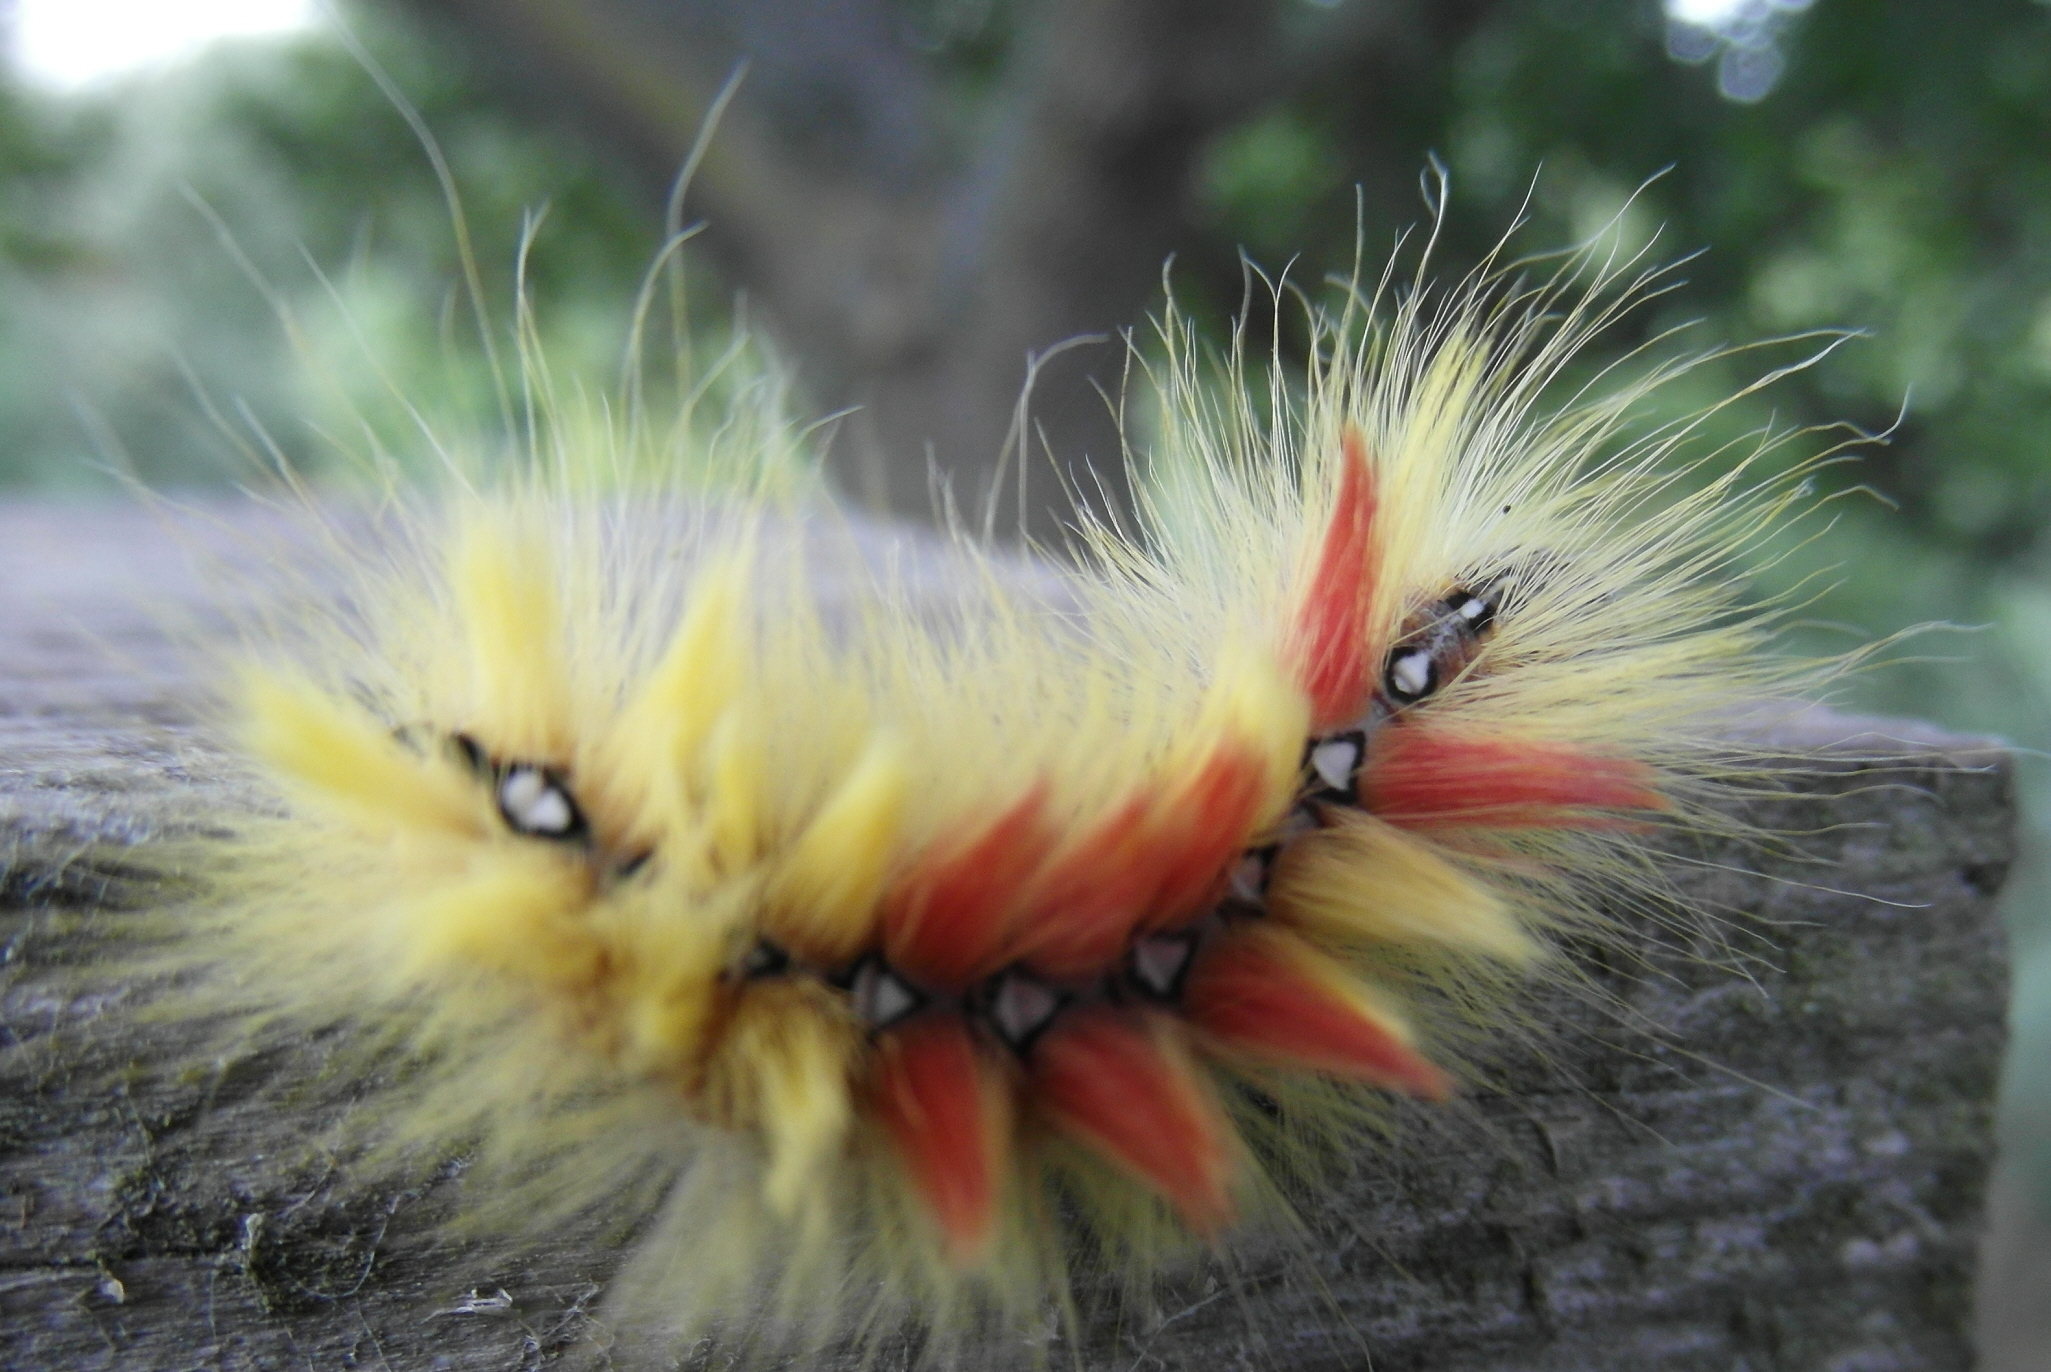 Caterpillar stage of Acronicta aceris (2) Copyright: Justin Carroll